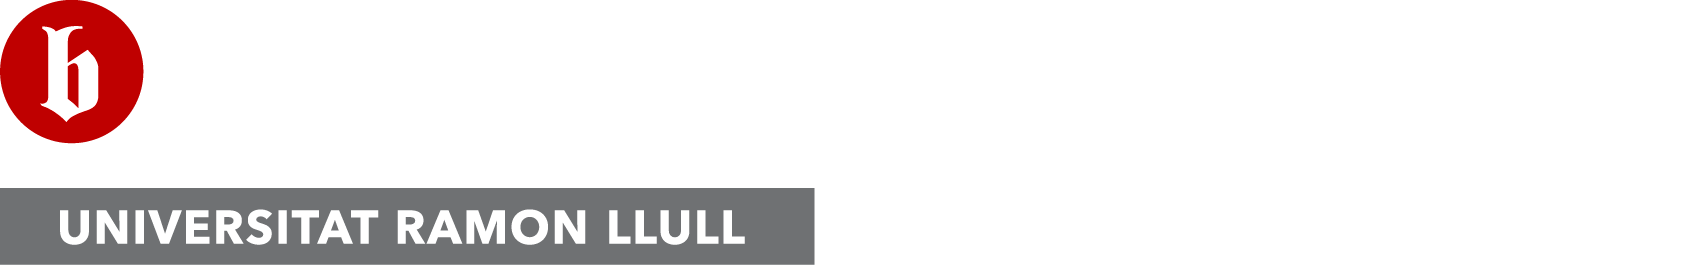 blanquerna logo fcri 2